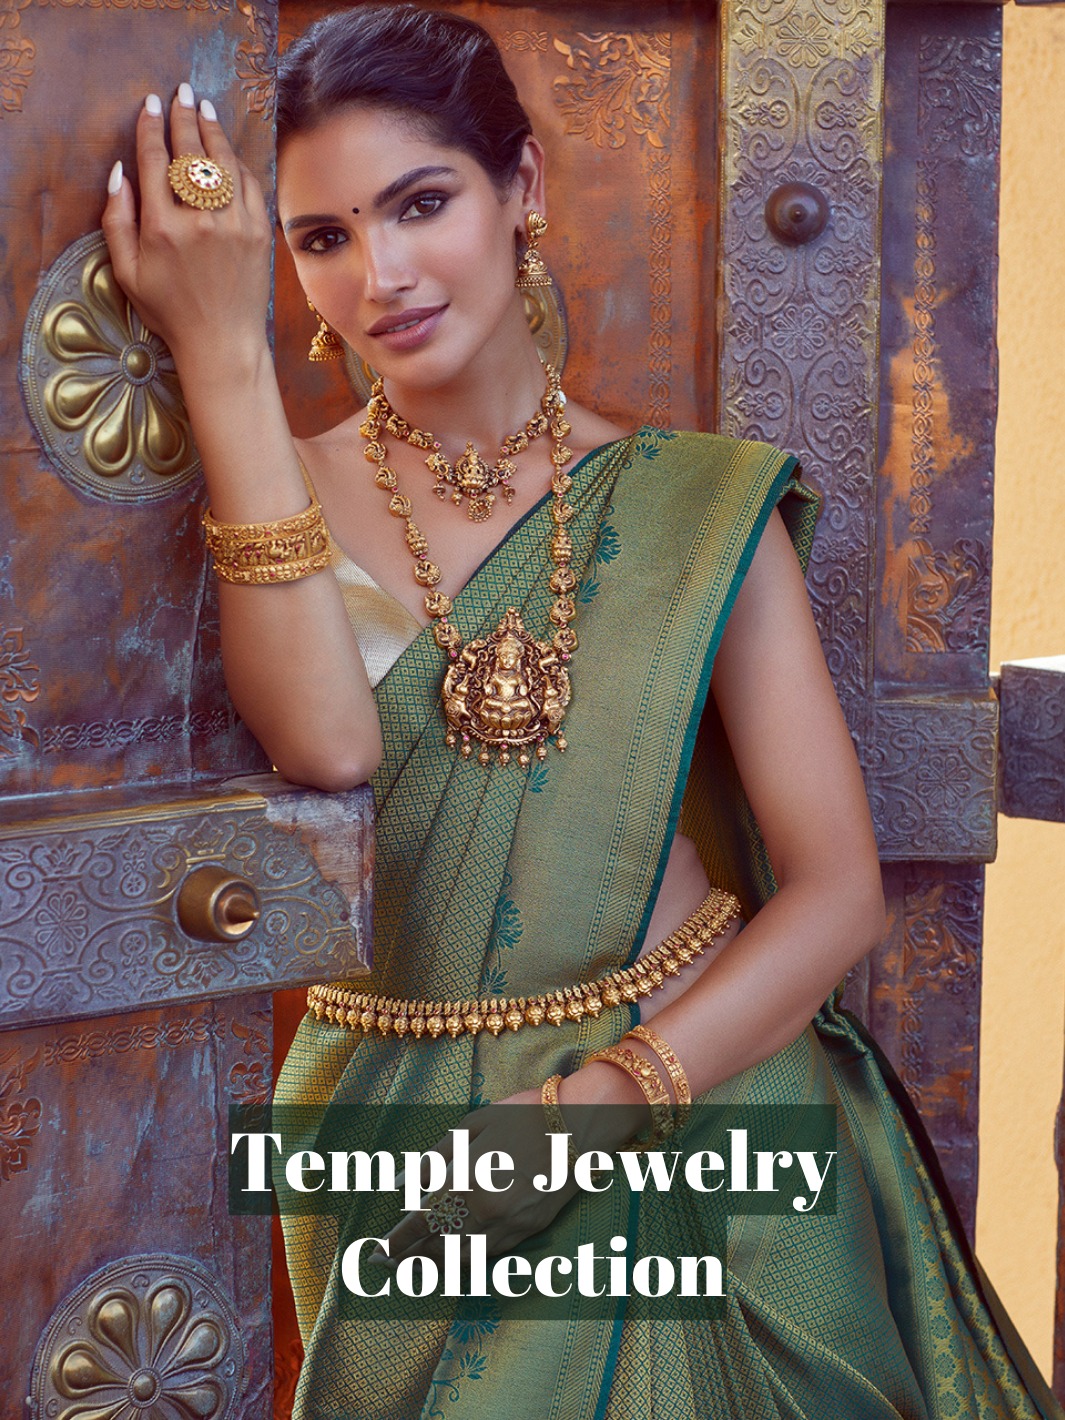 Temple Jewelry